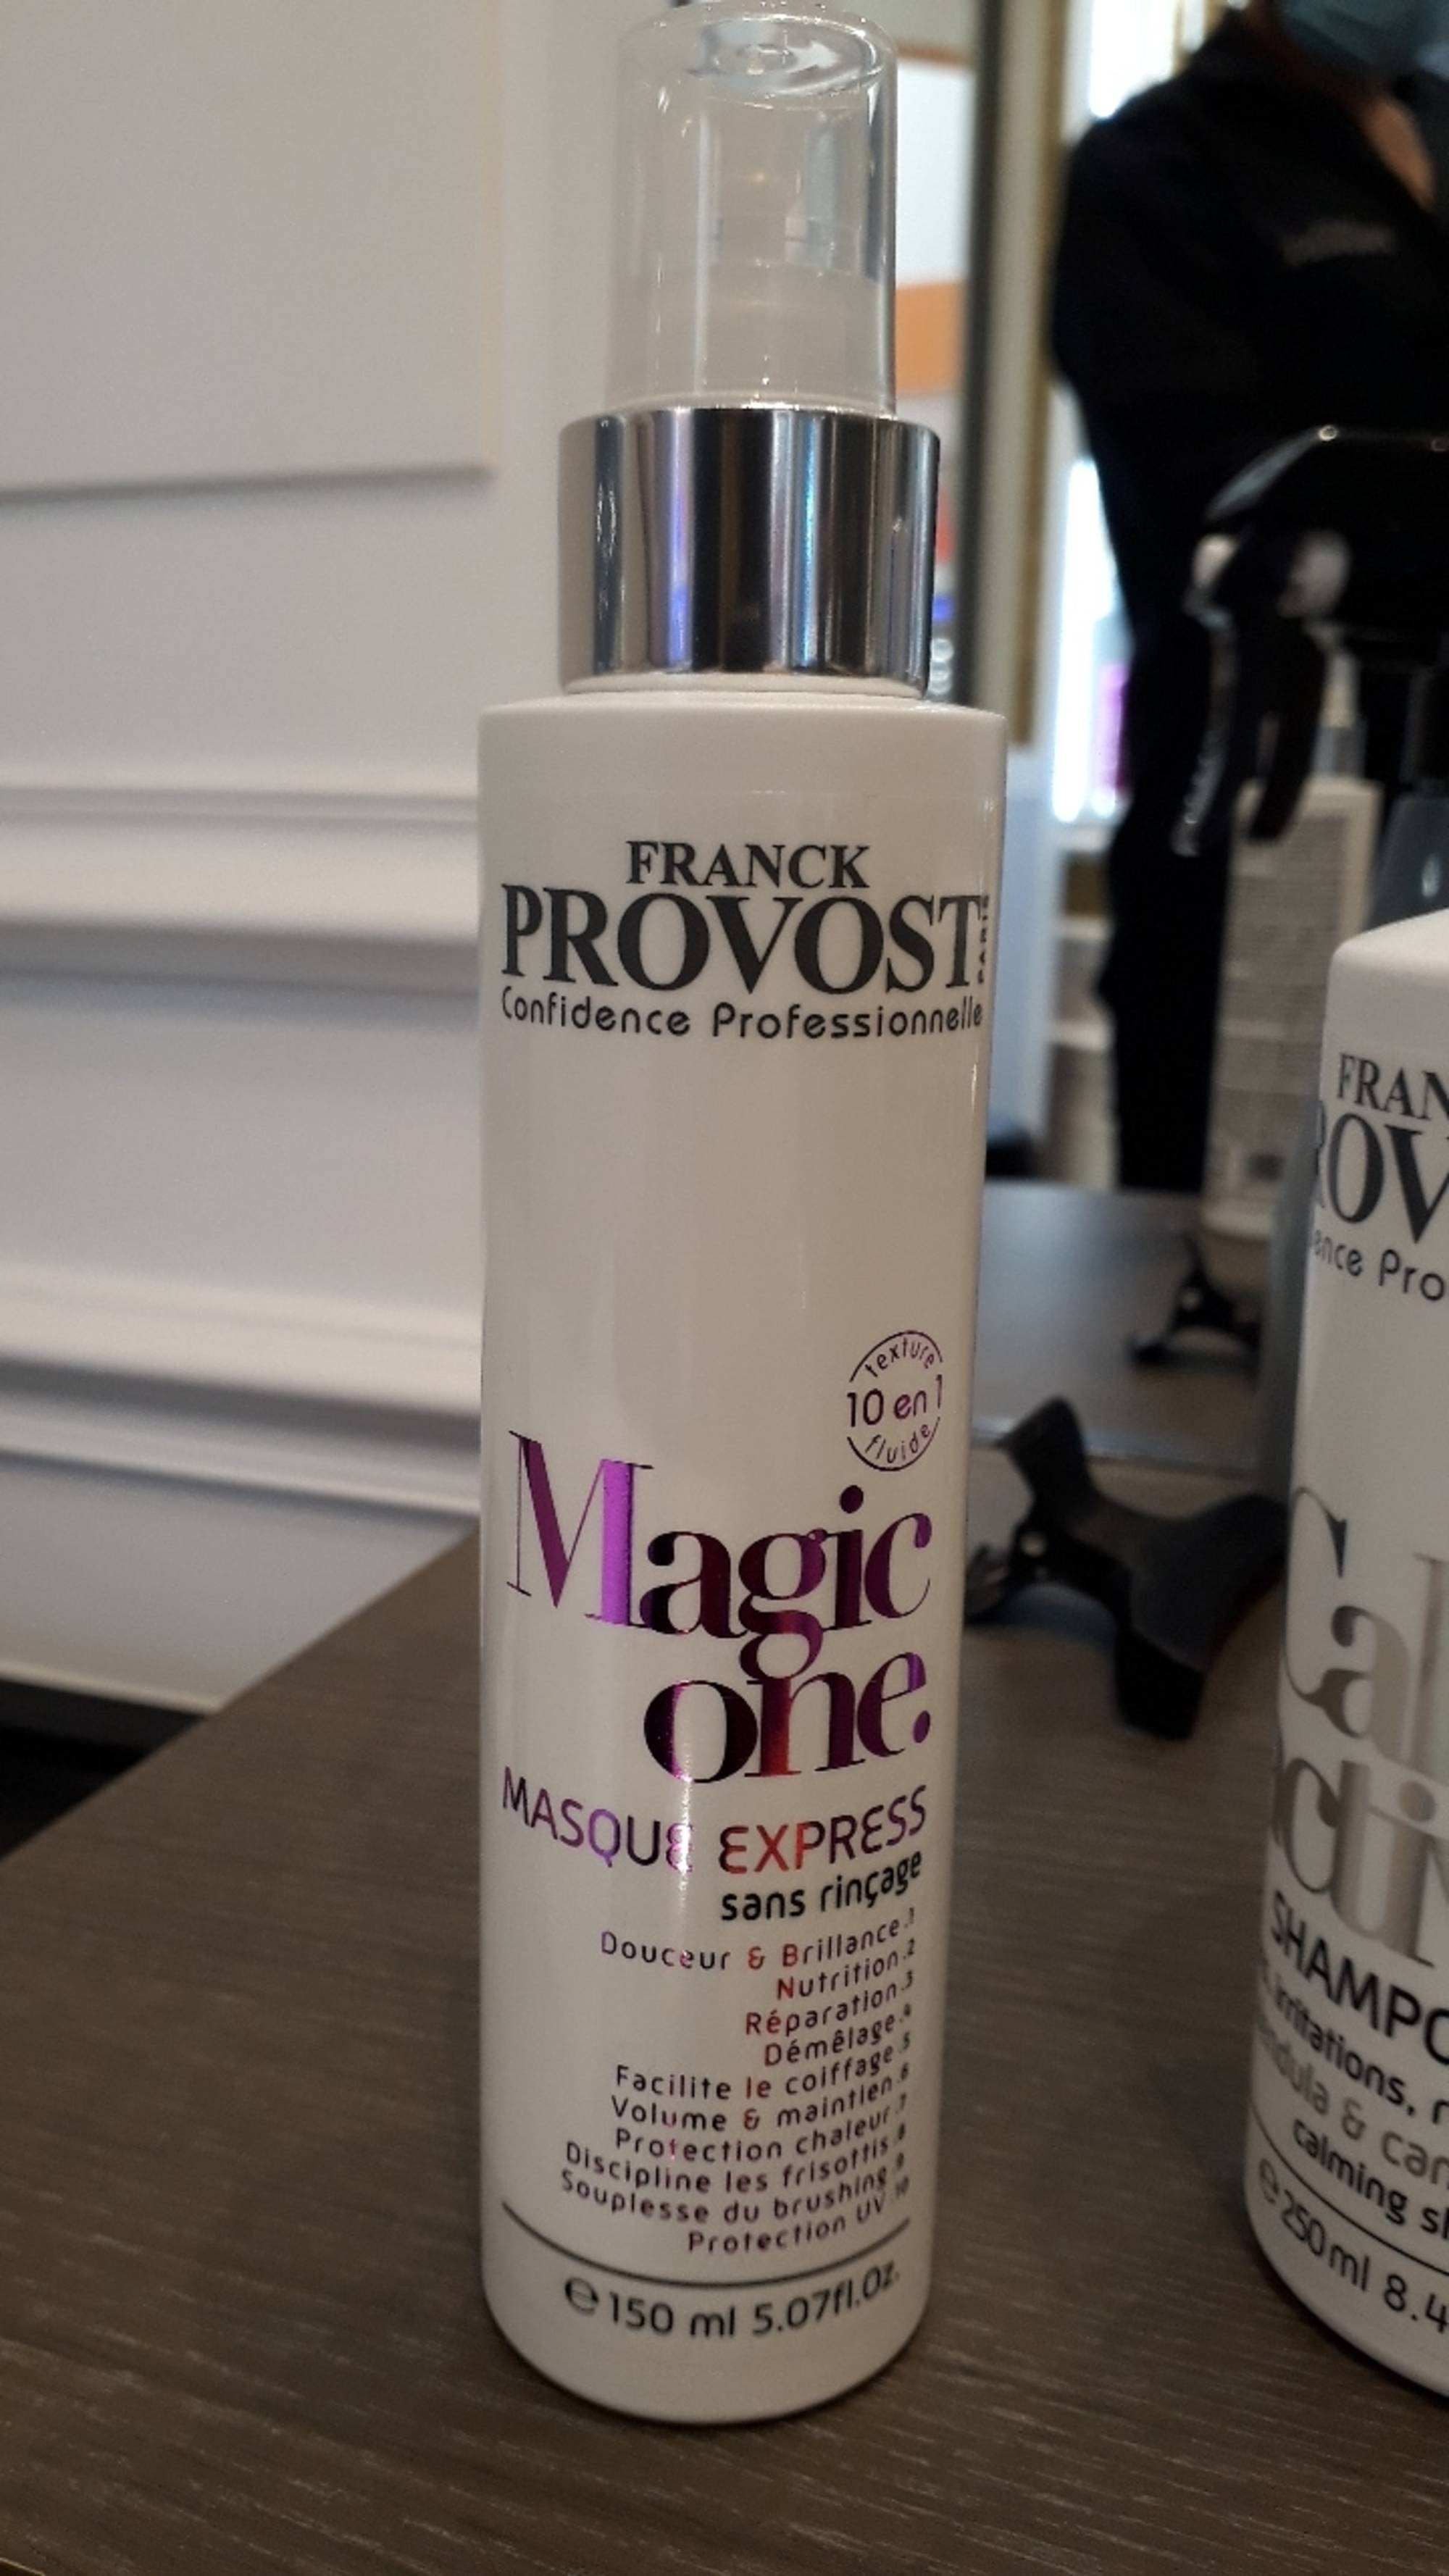 FRANCK PROVOST - Magic one - Masque express sans rinçage